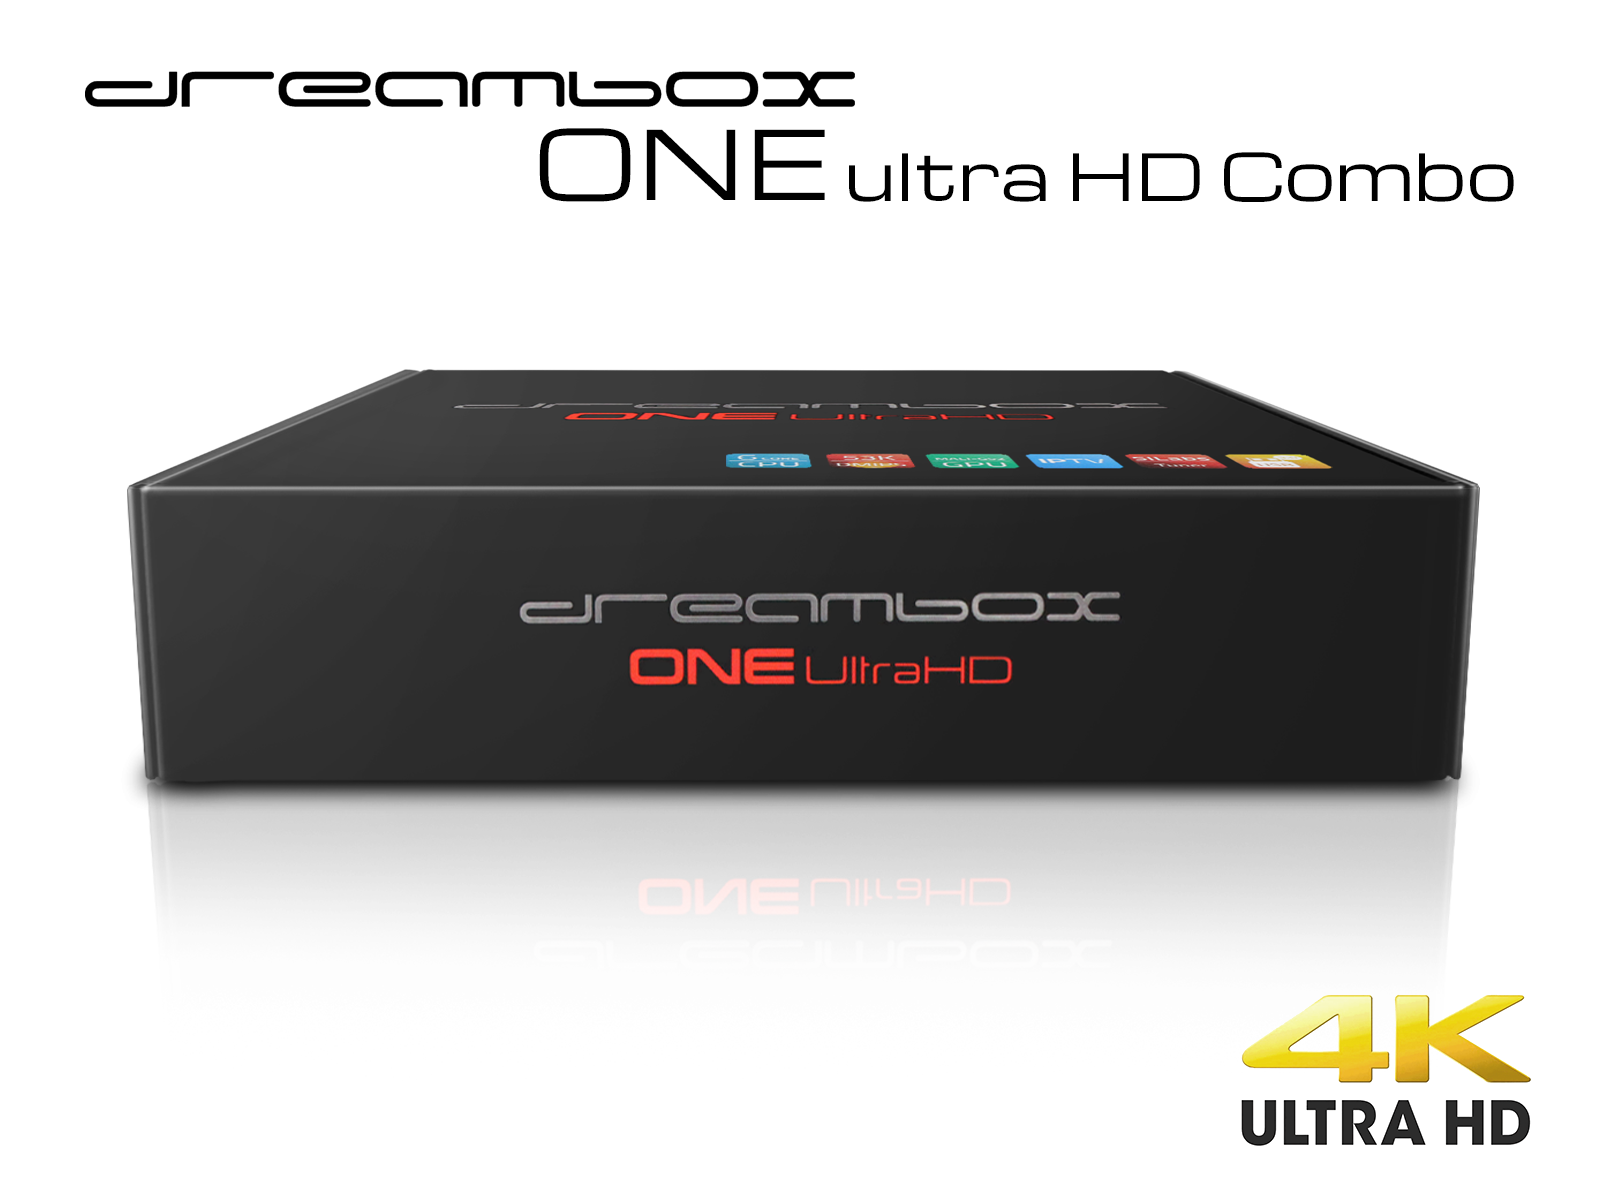 Dreambox One Combo Ultra HD BT 1x DVB-S2X / 1xDVB-C/T2 Tuner 4K 2160p E2 Linux Dual Wifi H.265